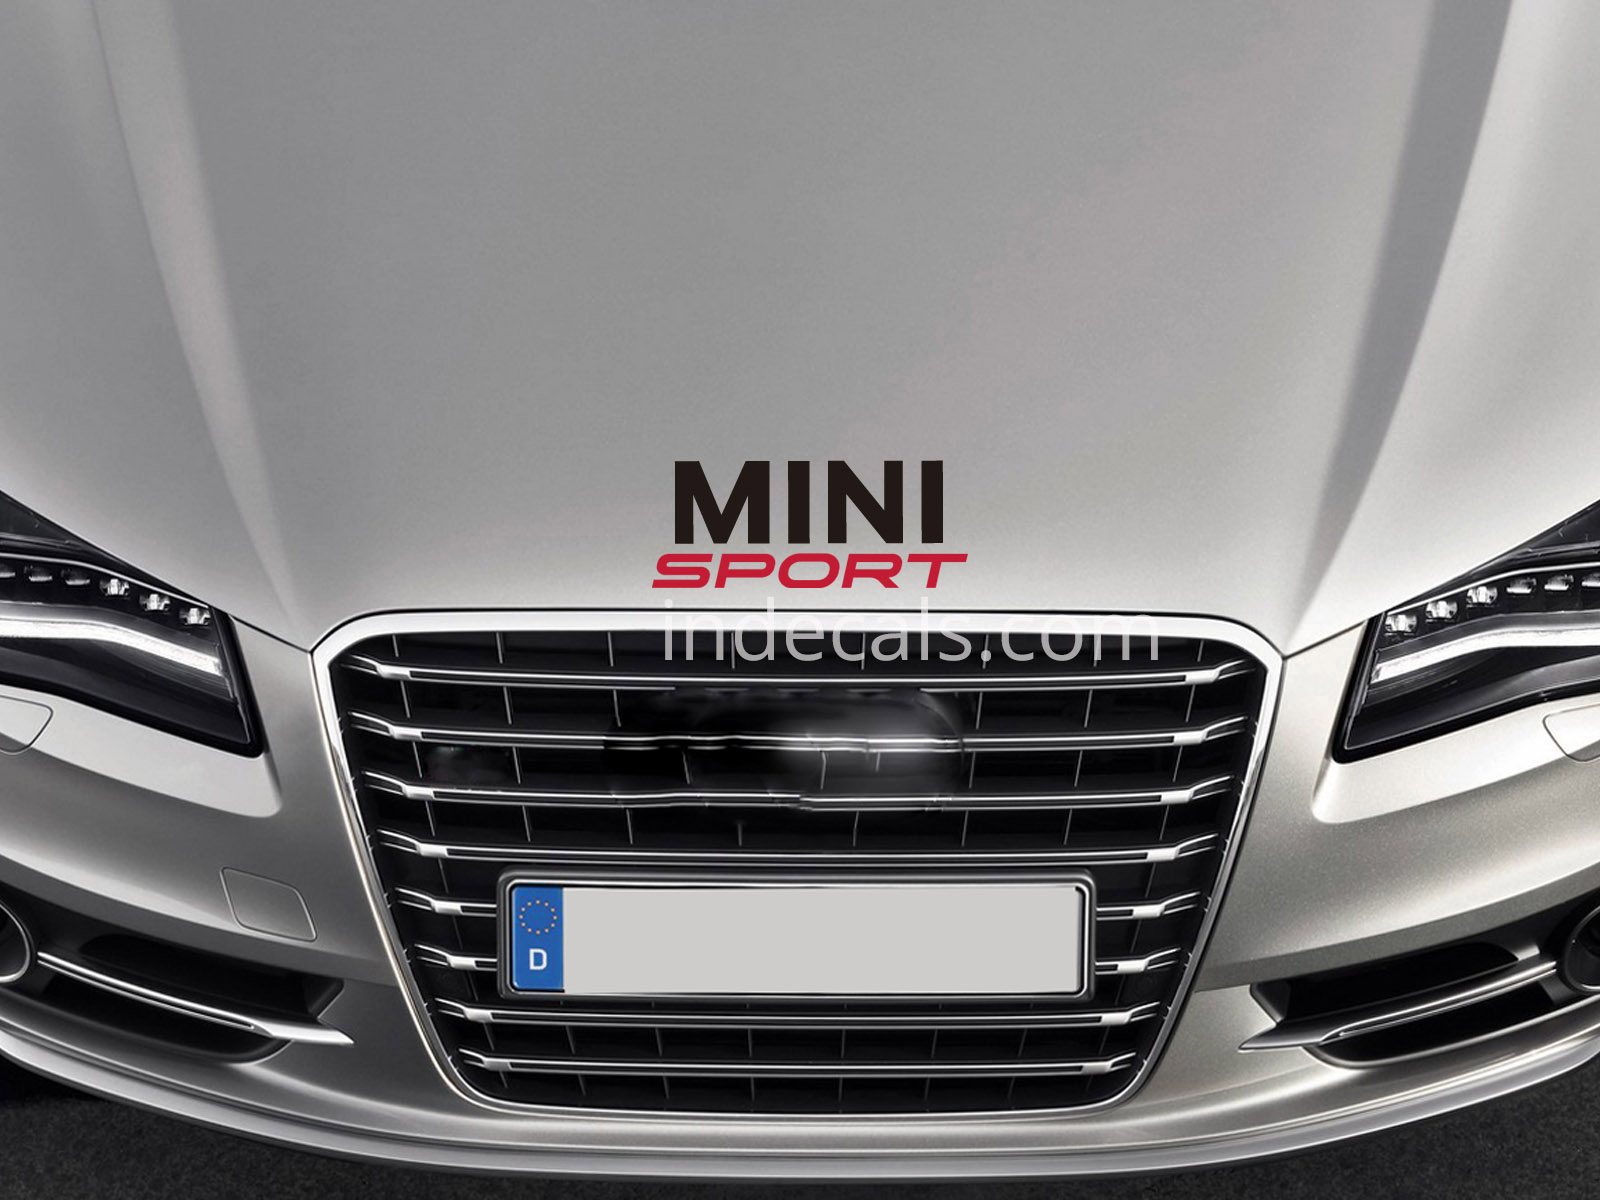 1 x Mini Sport Sticker for Bonnet - Black & Red